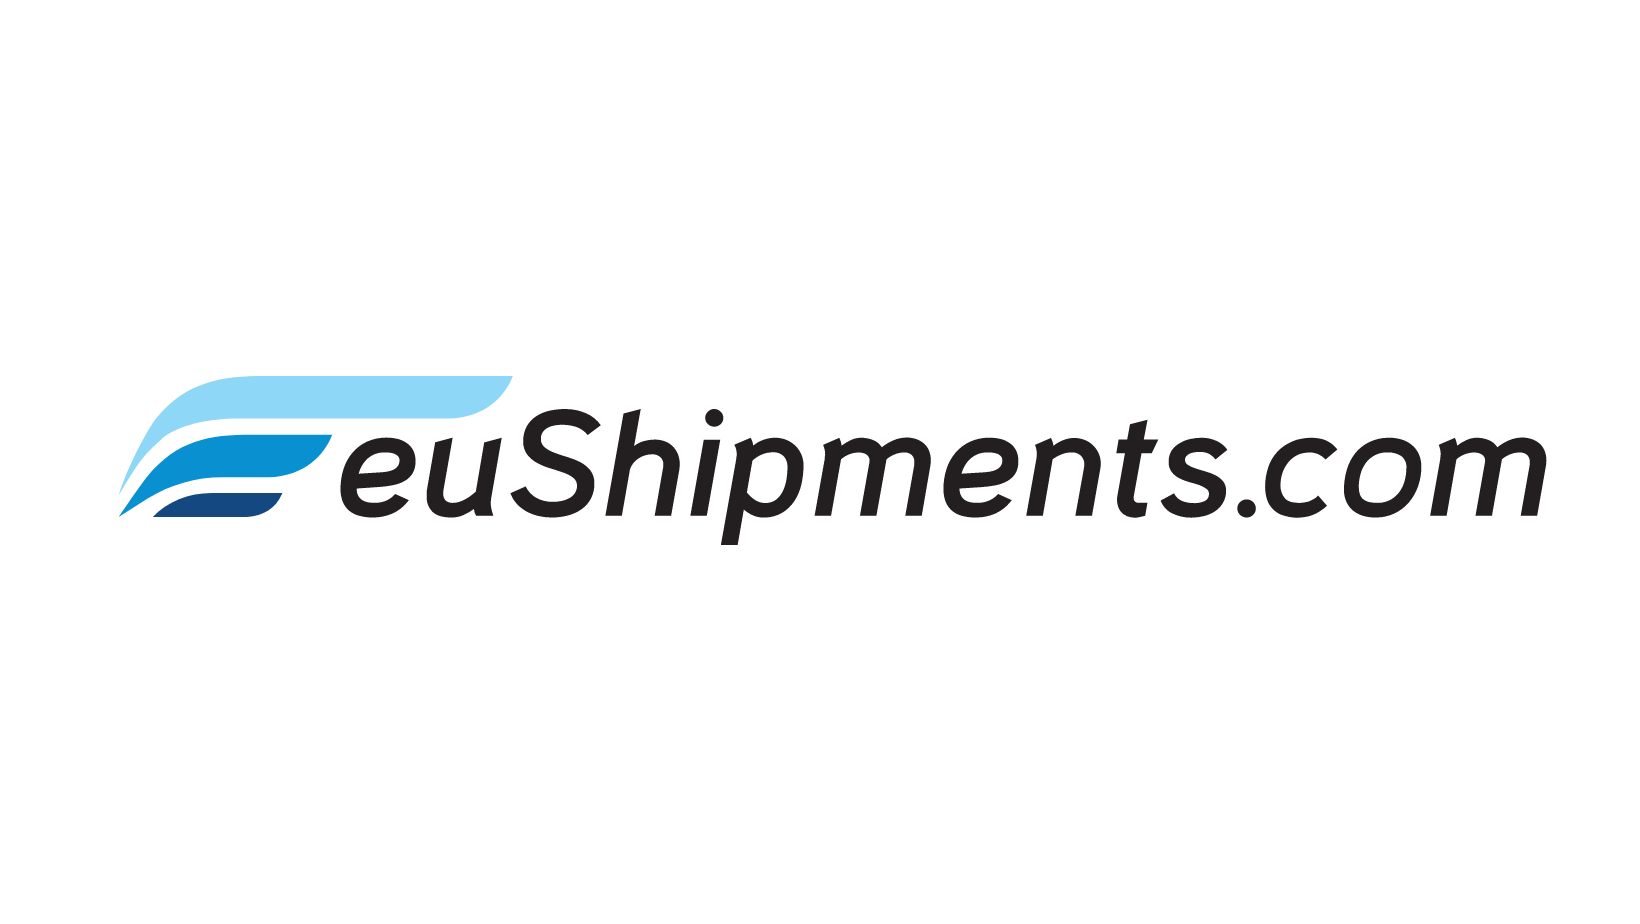 euShipments.com